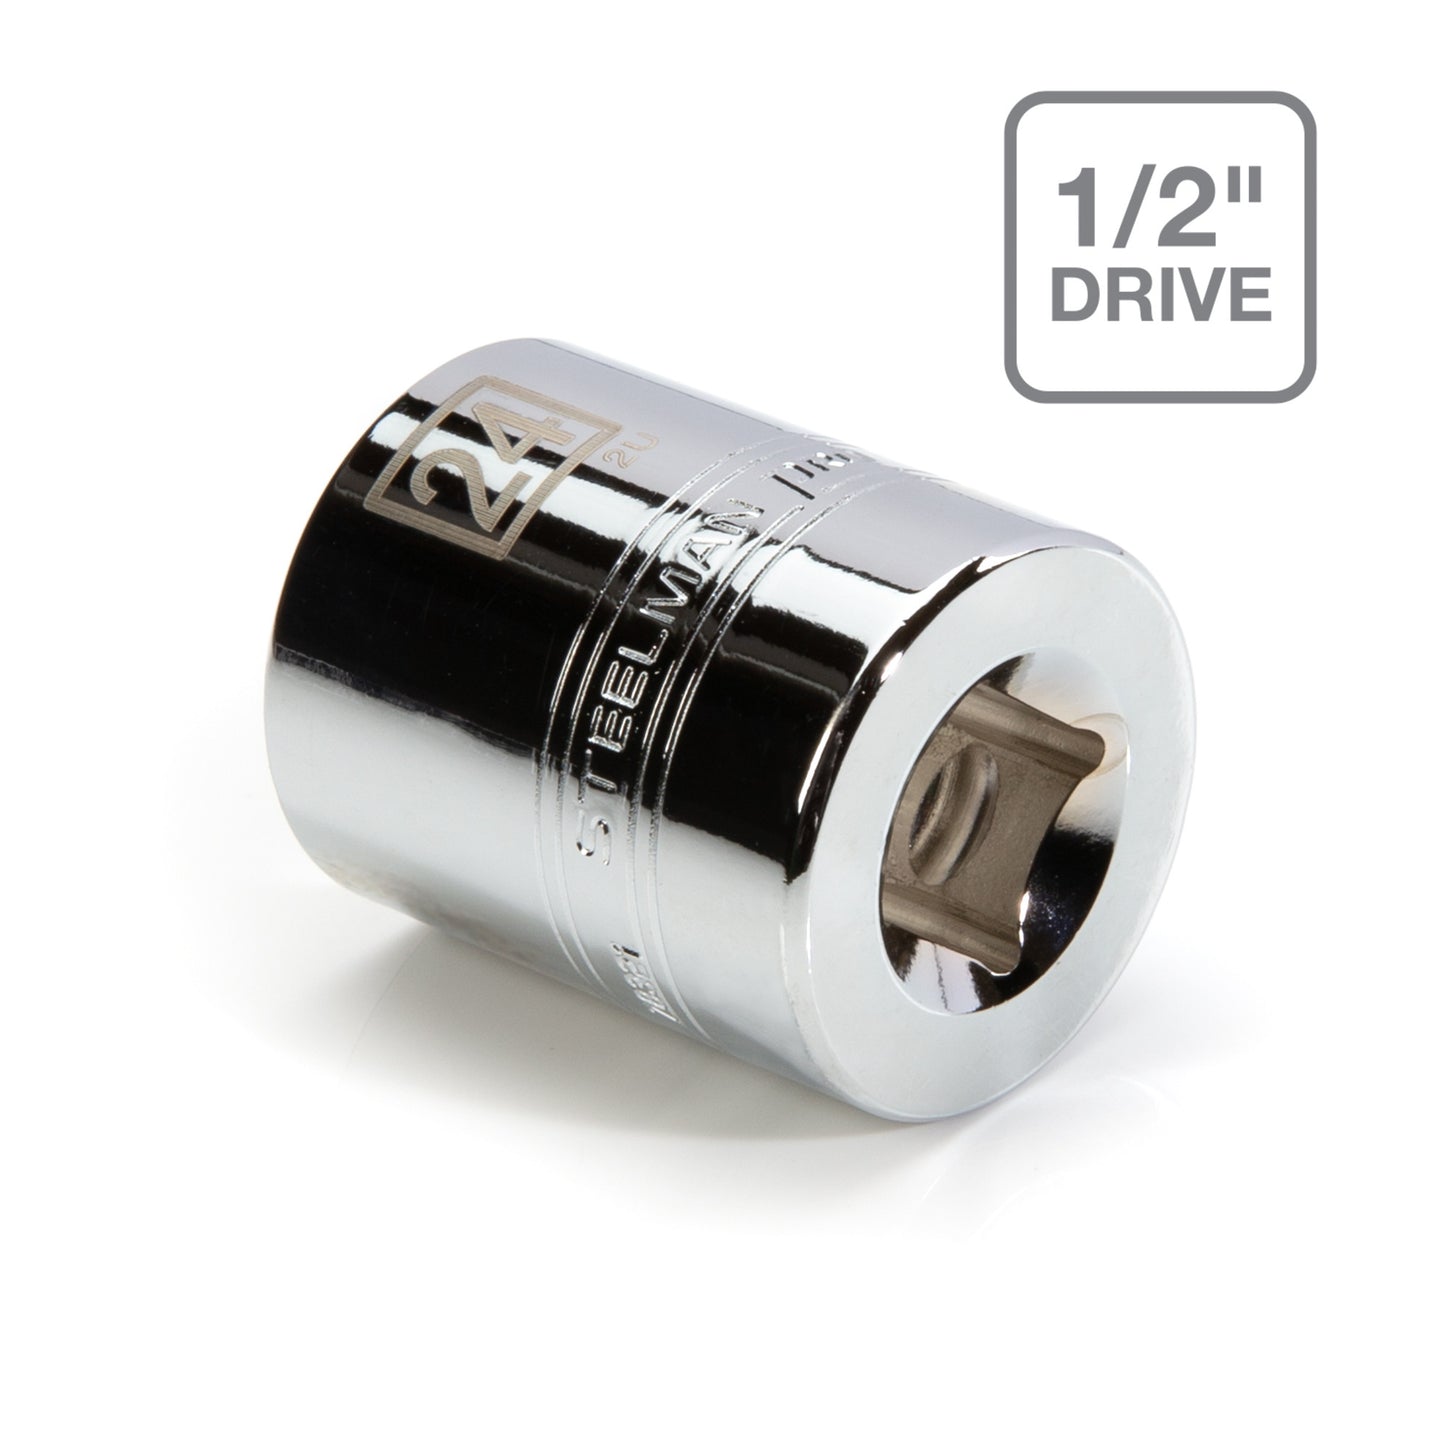 1/2-Inch Drive x 24mm 6-Point Metric Single Socket